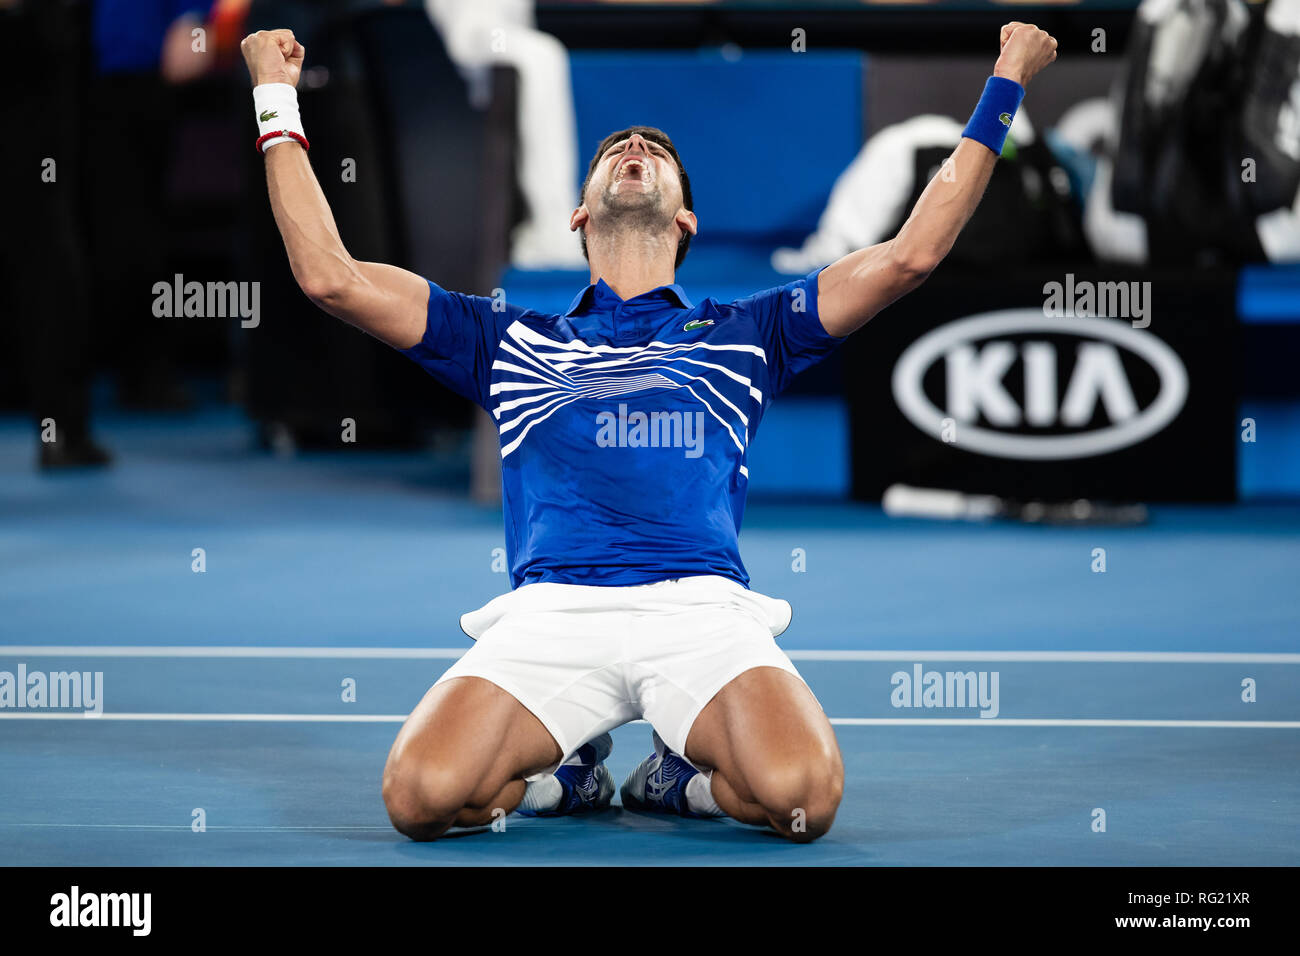 Melbourne, Australia. 27th Jan, 2019. Novak Djokovic won his 7th Australian Open title at the Grand Slam tennis tournament in Melbourne, Australia. Frank Molter/Alamy Live news Stock Photo - Alamy